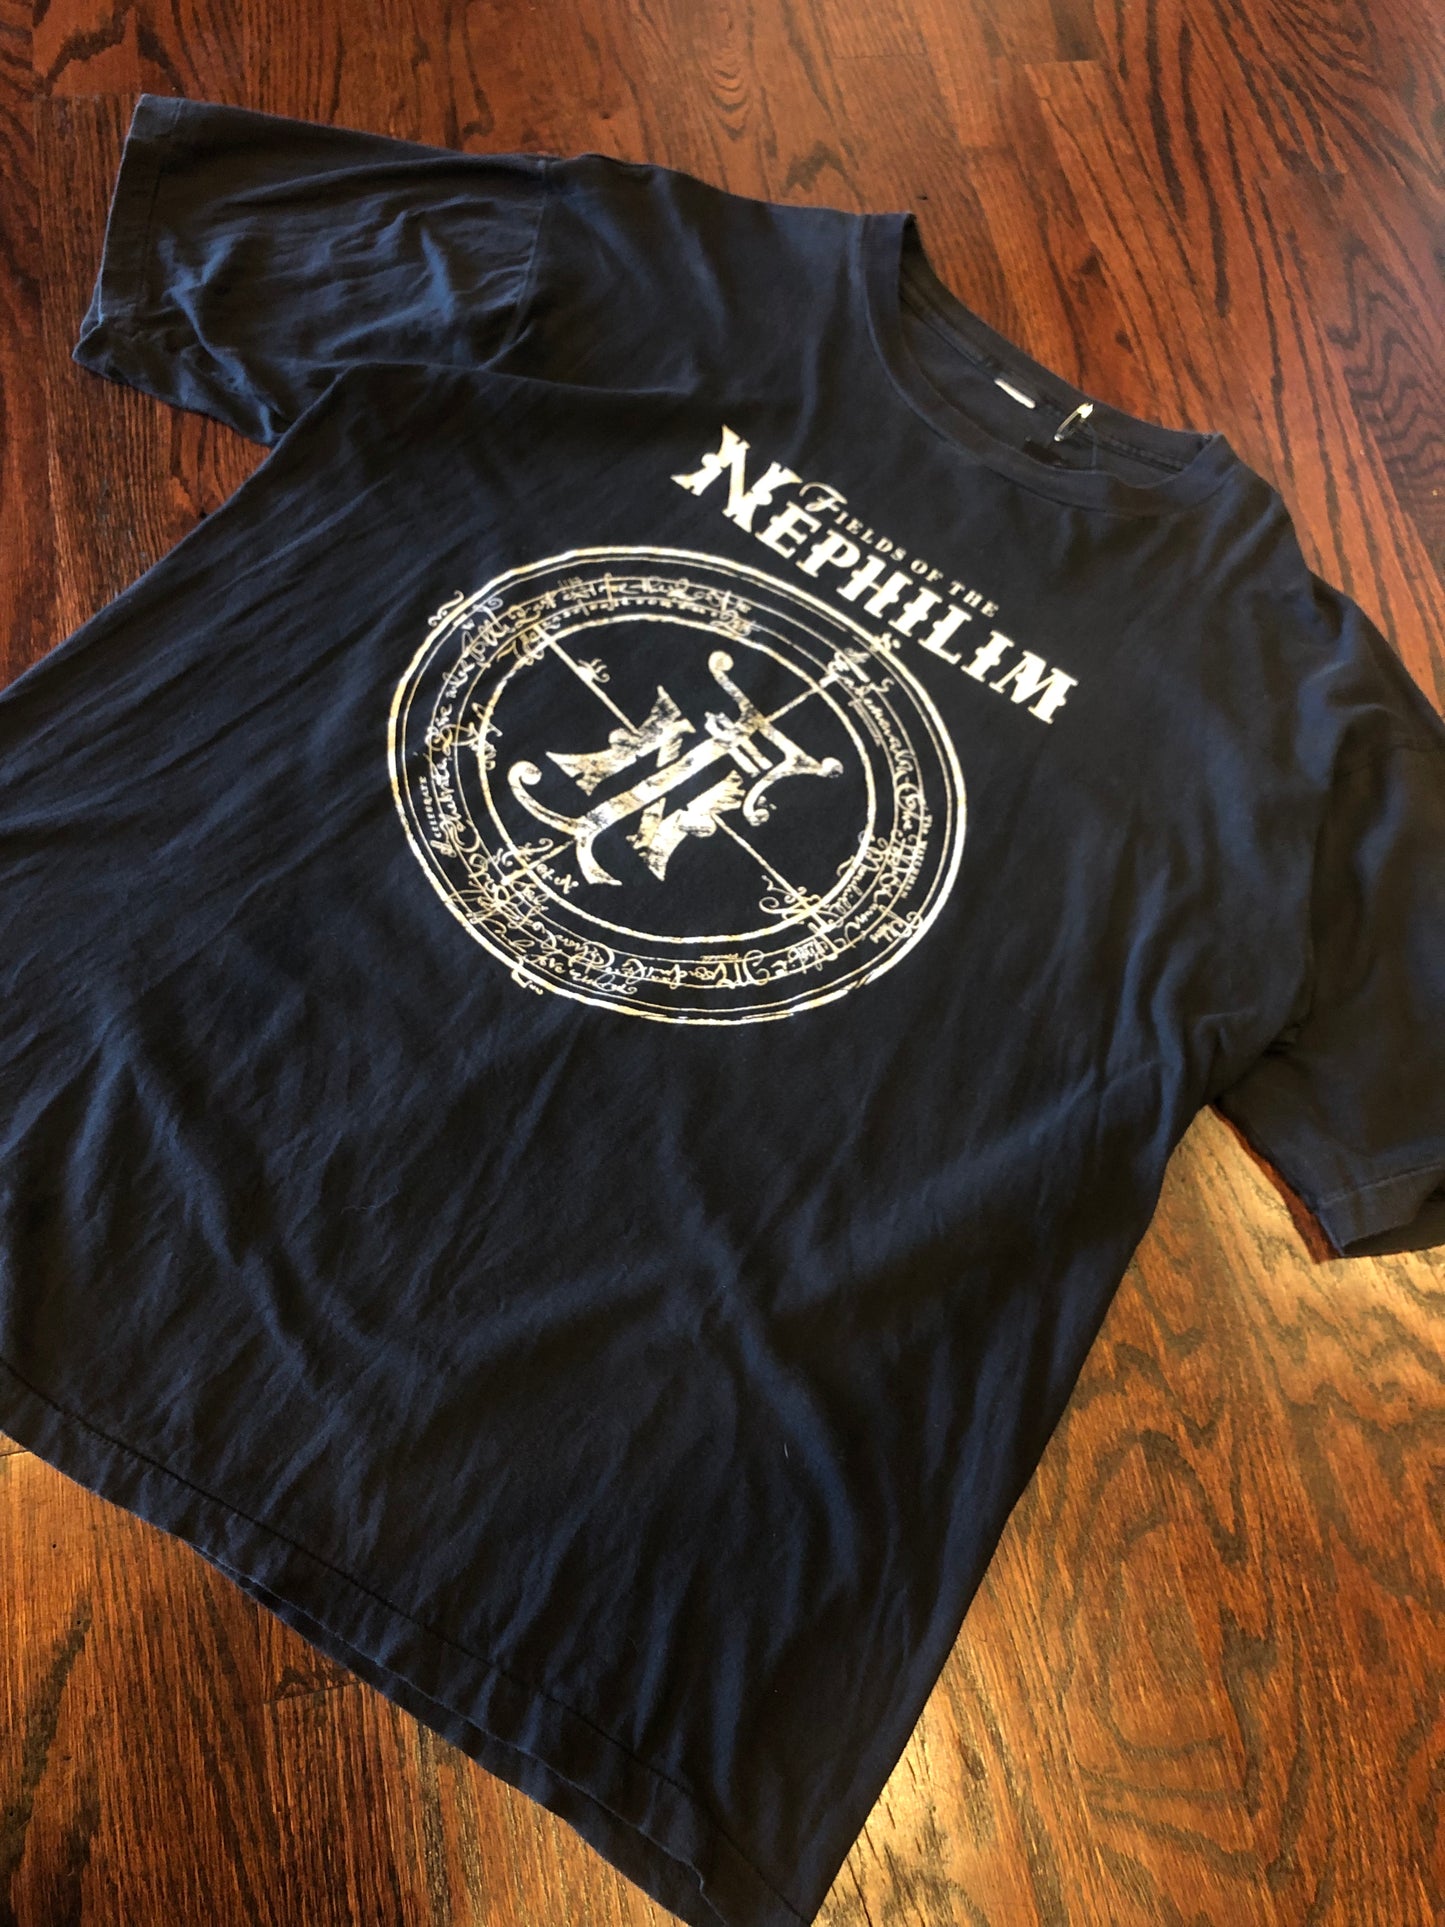 Vintage Fields of Nephilim 1988 UK Tour Merch T-Shirt